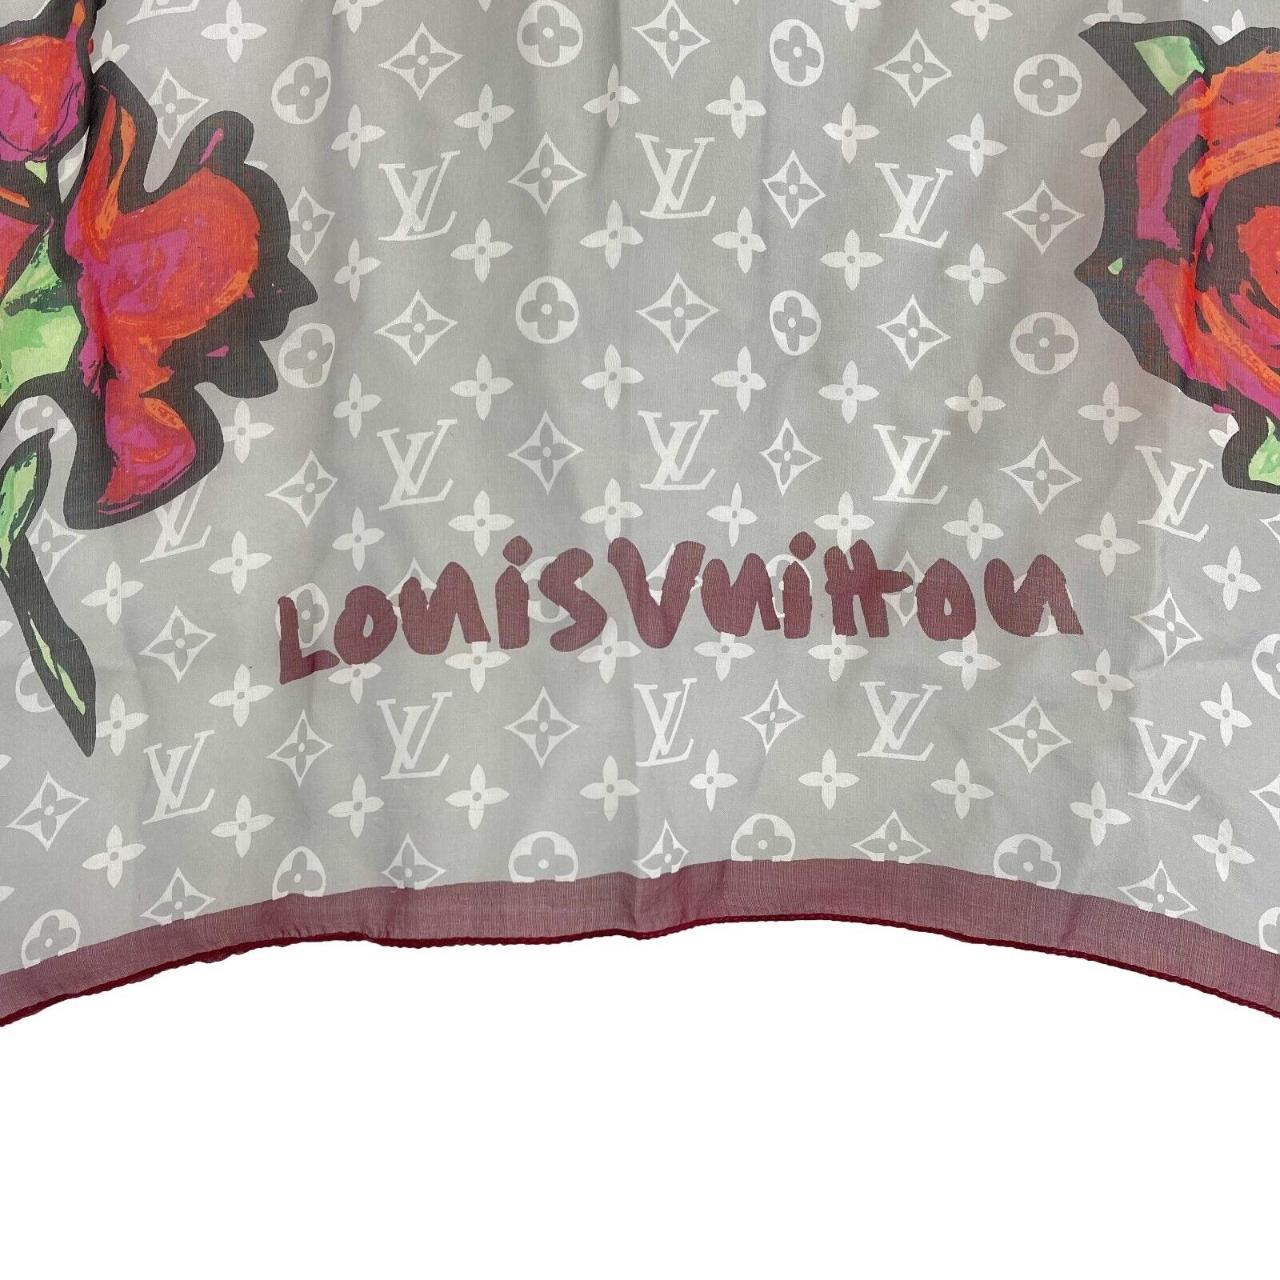 Louis Vuitton shorts wool and silk from Virgil - Depop